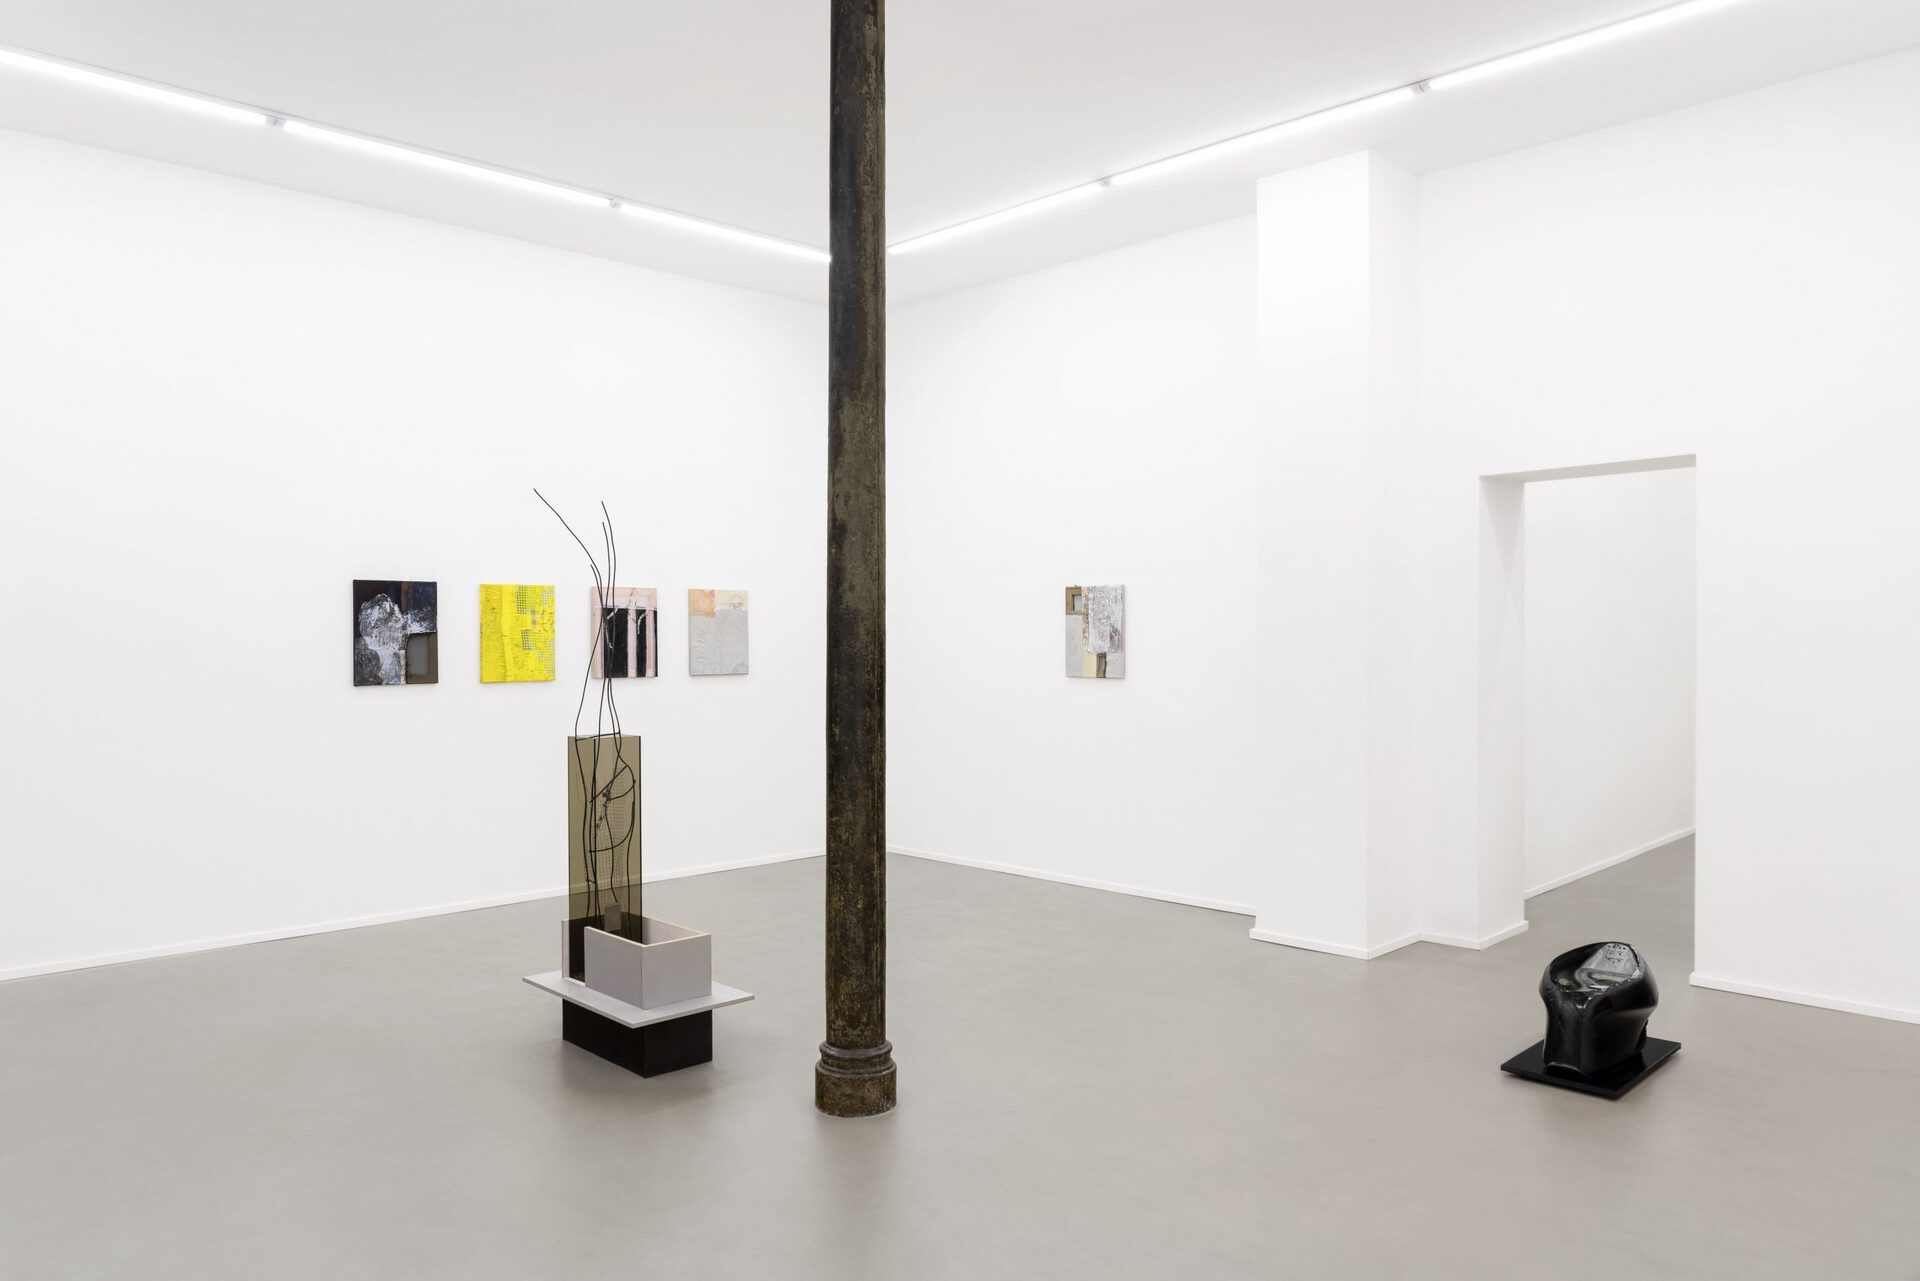 Ania Bąk, Belly - talker, installation view, 2022, Milan